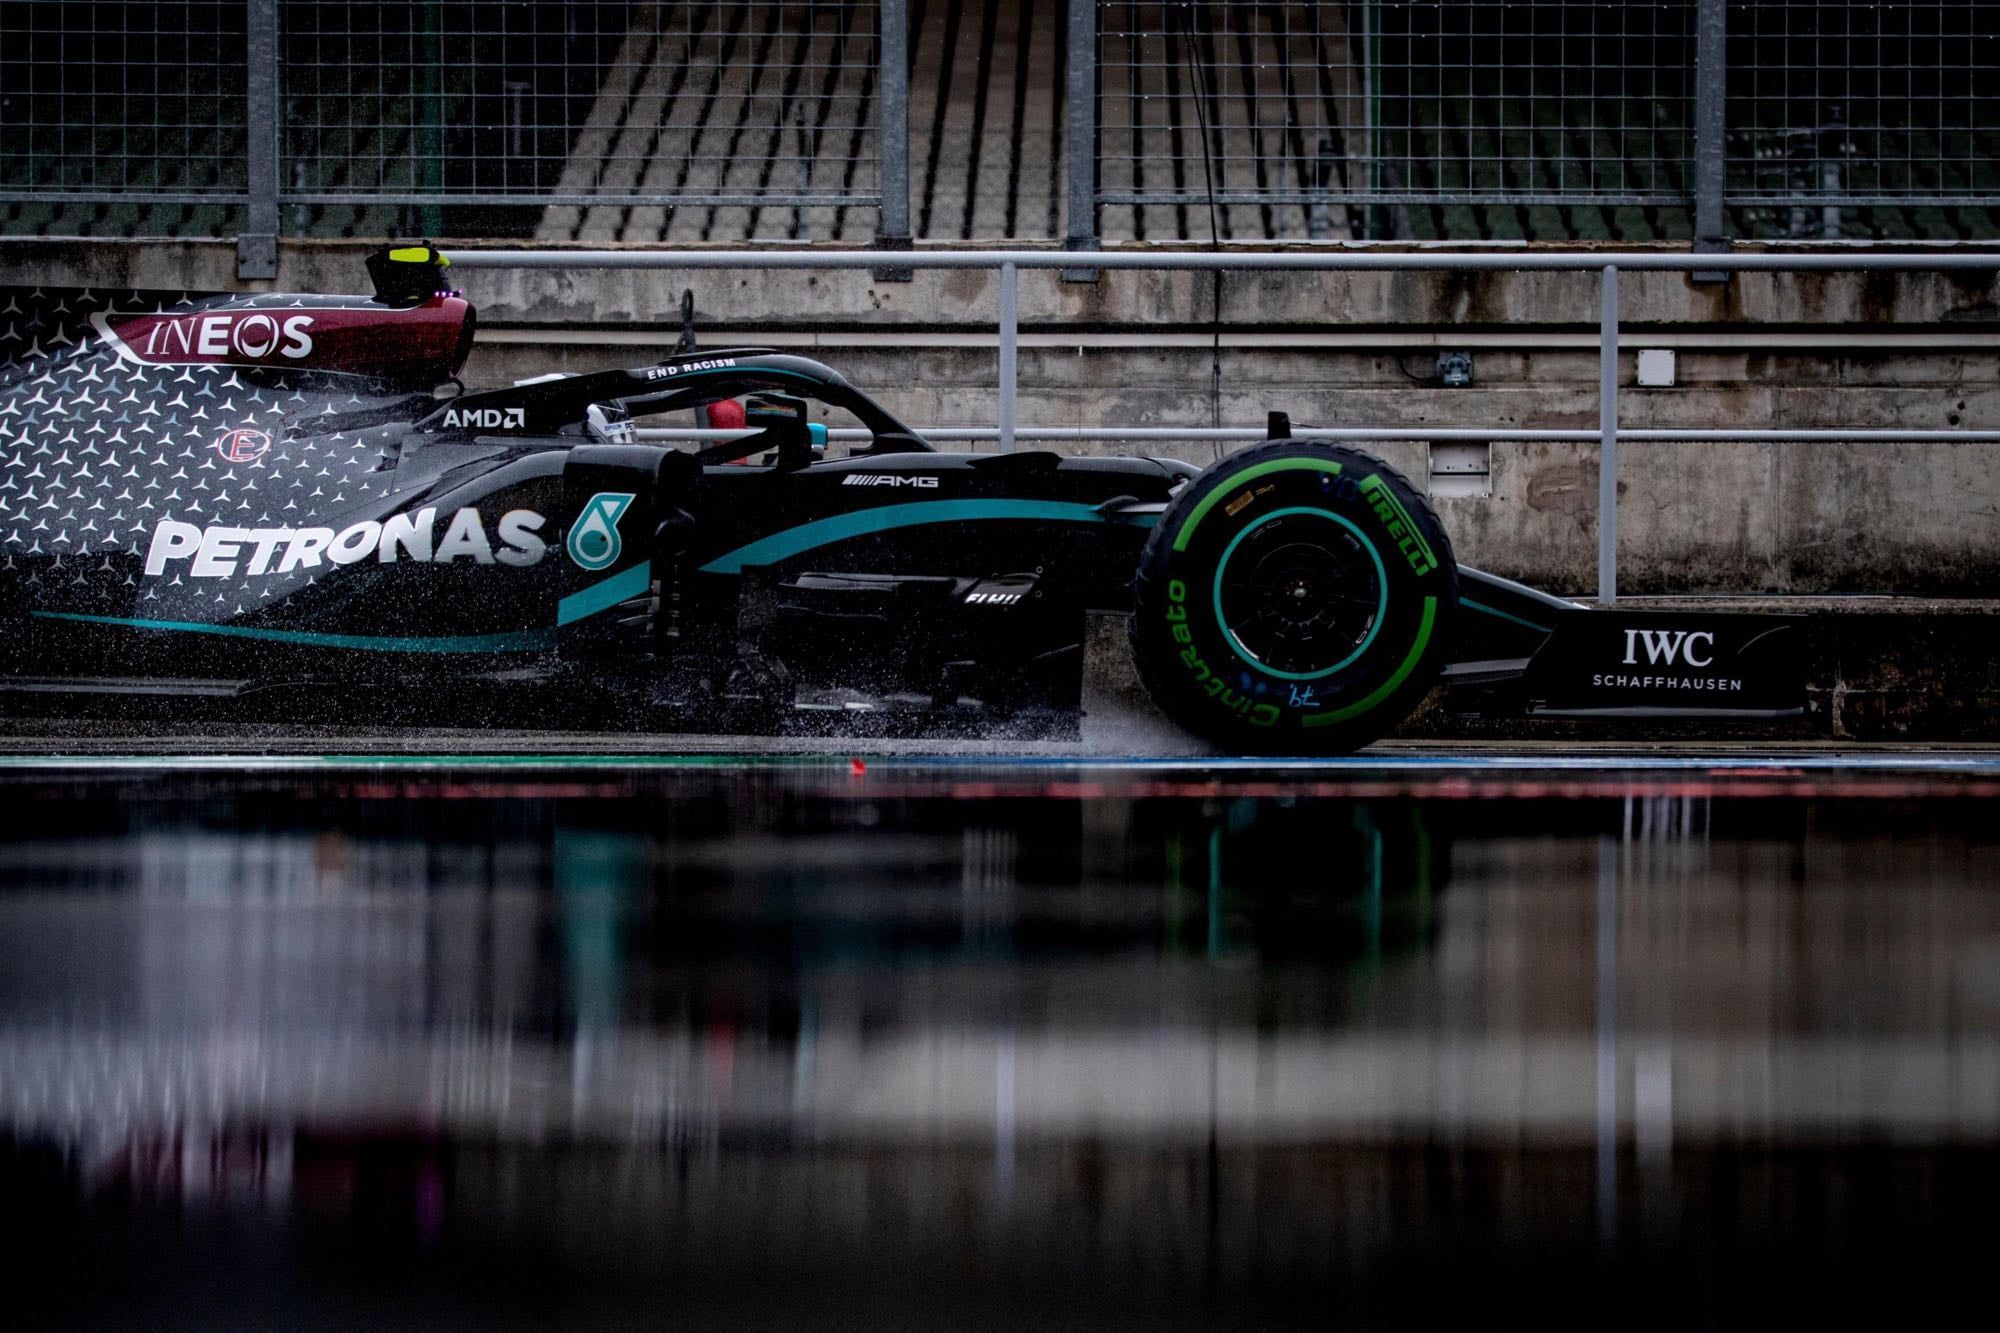 Mercedes AMG Petronas #INEOS #IWC Formula 1 Vaittari BOTTAS Mercedes F1 P #wallpaper #hdwallpaper #desktop. Amg petronas, Mercedes amg, Formula 1